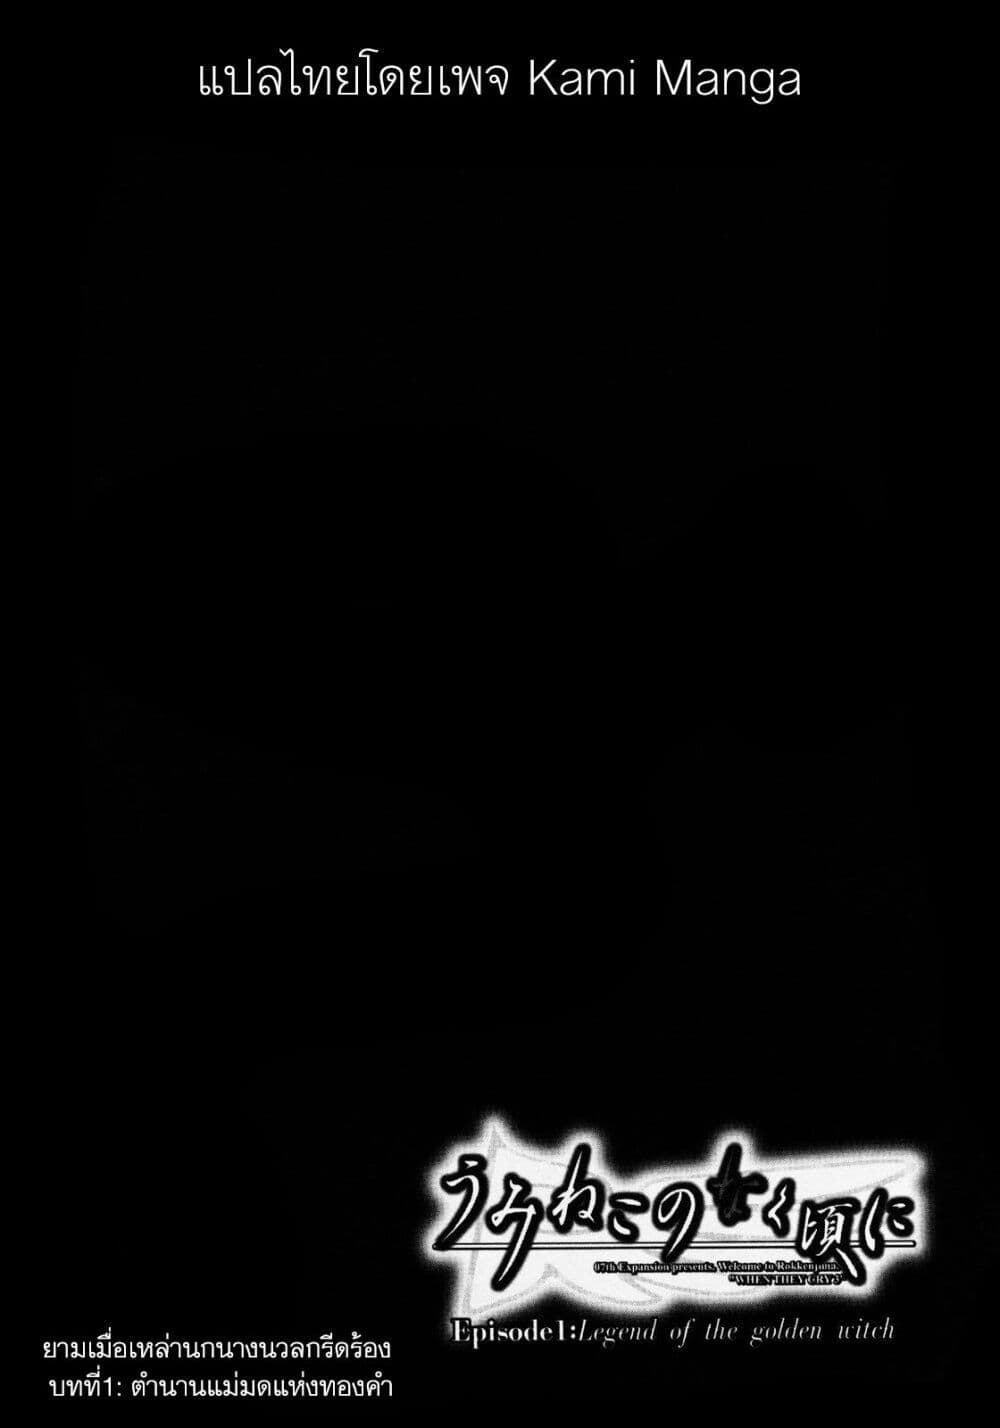 Umineko no Naku Koro ni Episode 1 Legend of the Golden Witch Chapter2 37